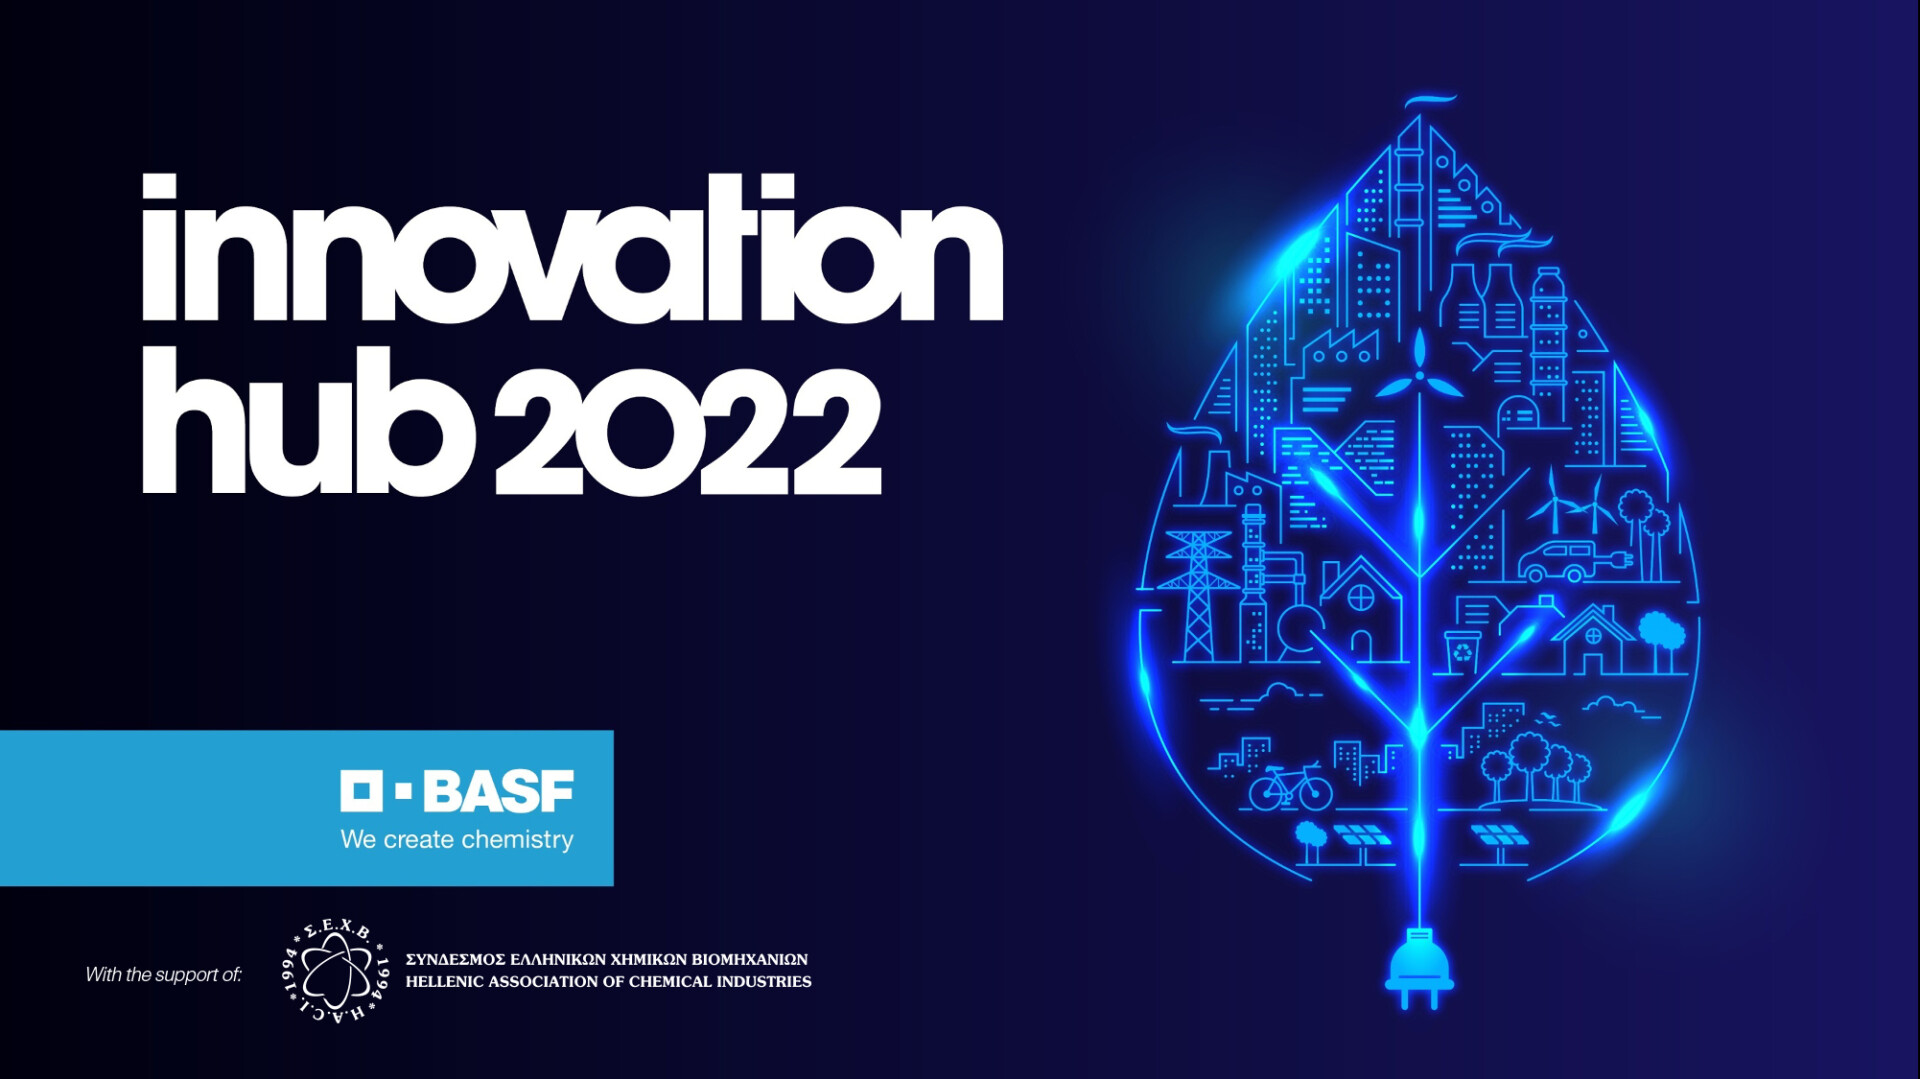 Innovation Hub 2022 © BASF